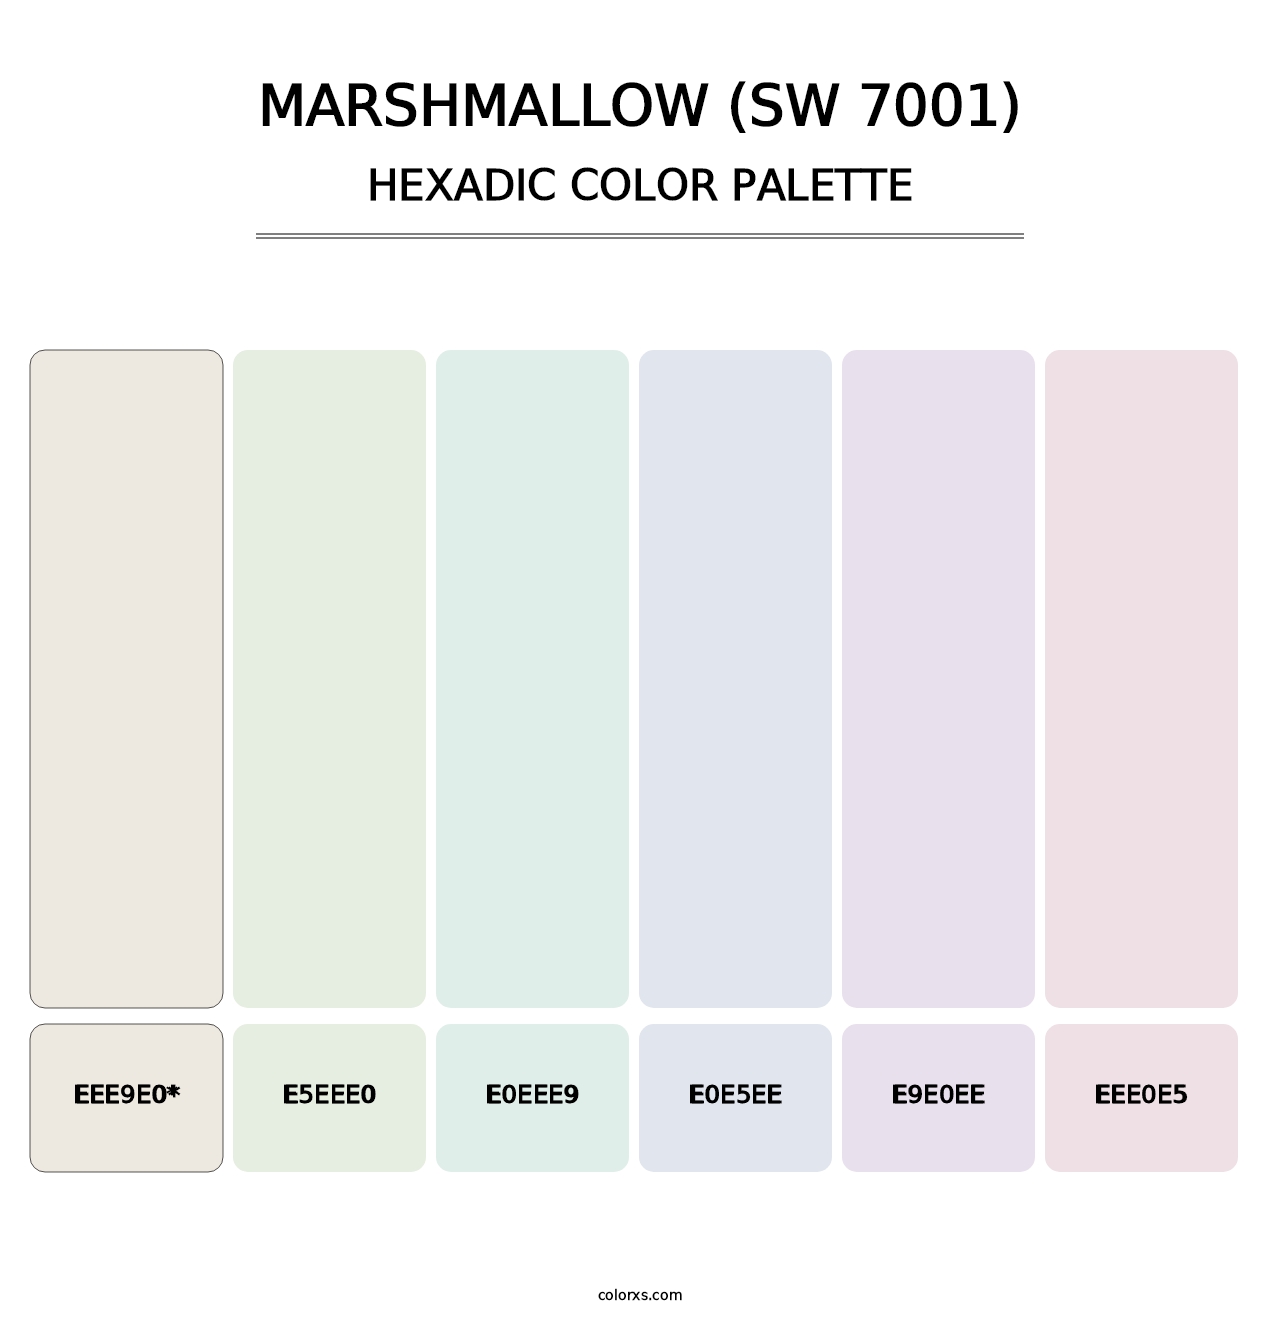 Marshmallow (SW 7001) - Hexadic Color Palette